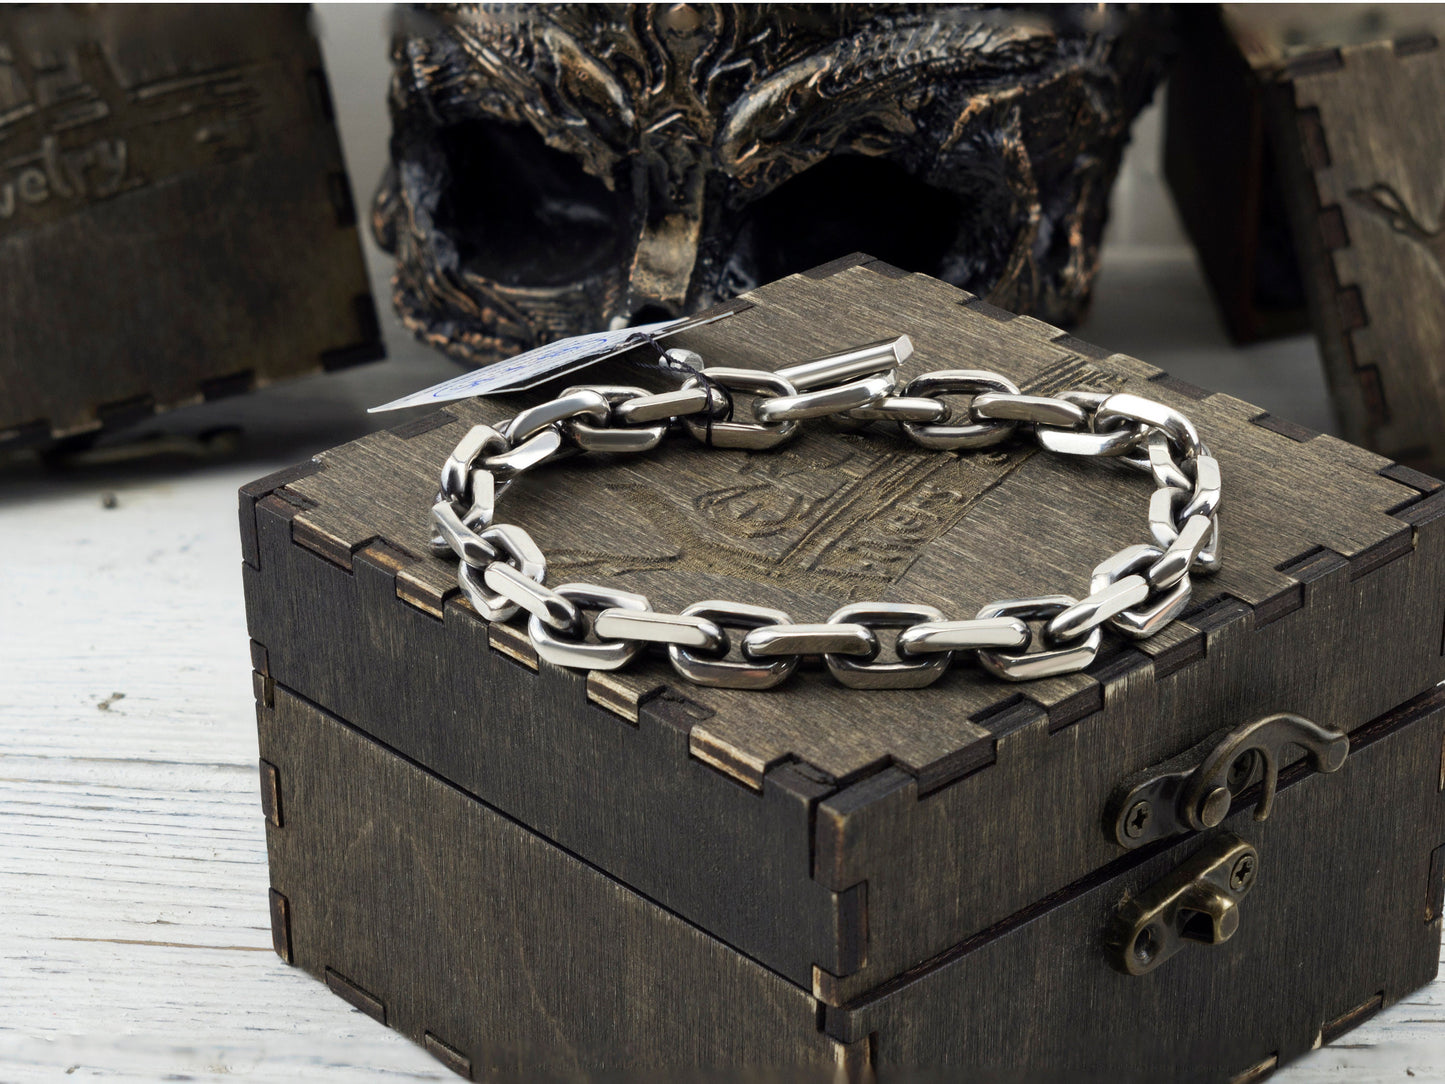 Anchor chain bracelet Sterling silver 925  bracelet anchor Men's bracelet  9 mm width  Silver bracelet with personalization